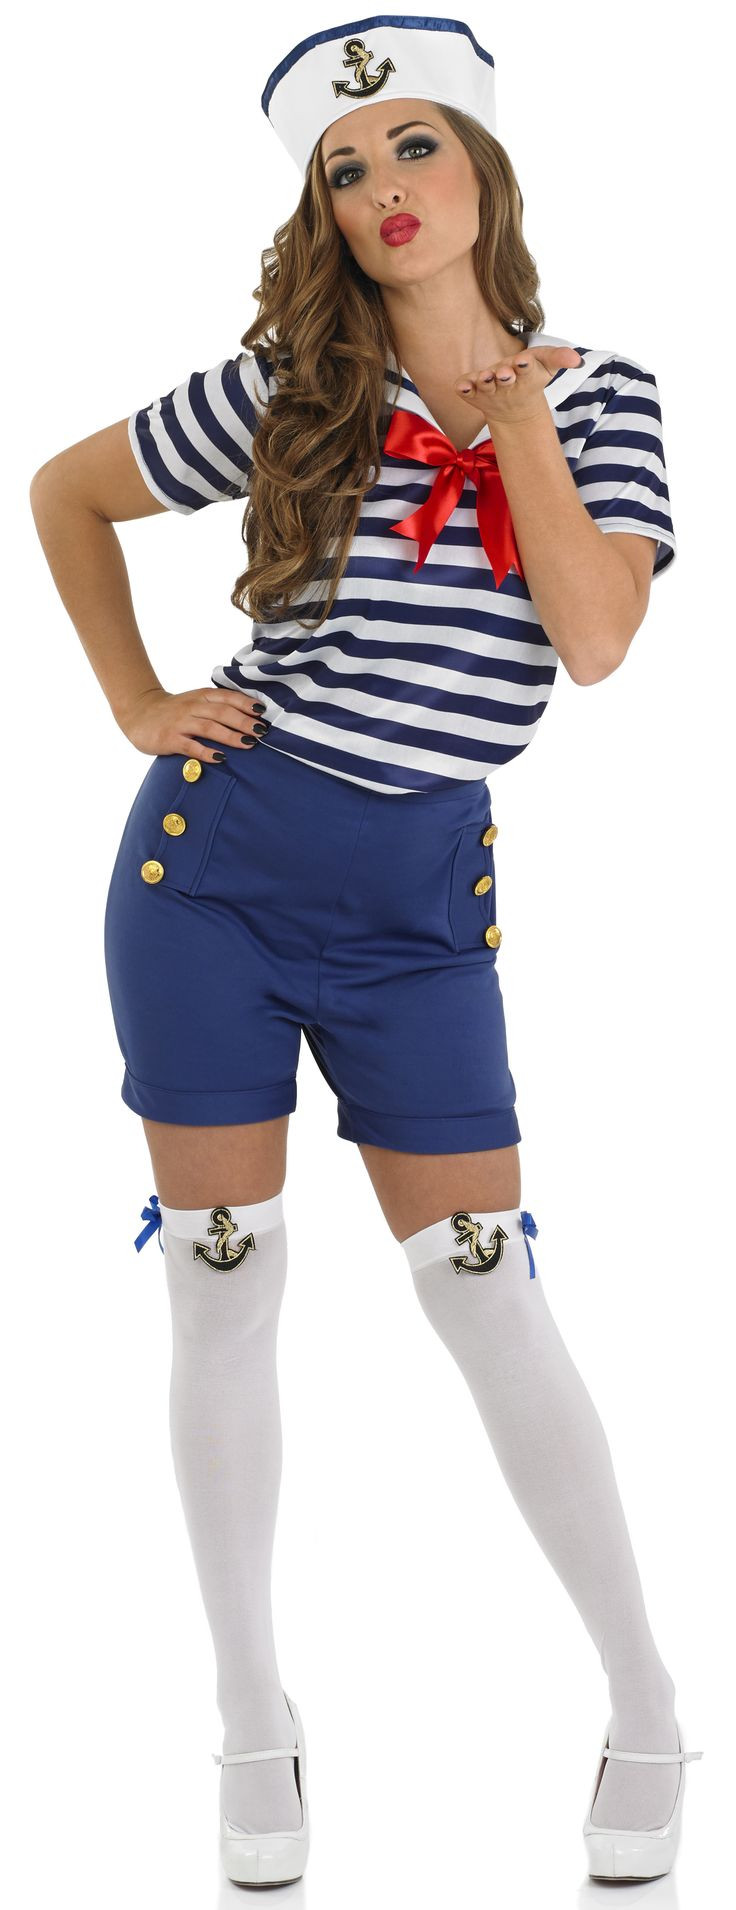 DIY Sailor Costume
 Best 25 Sailor costumes ideas on Pinterest